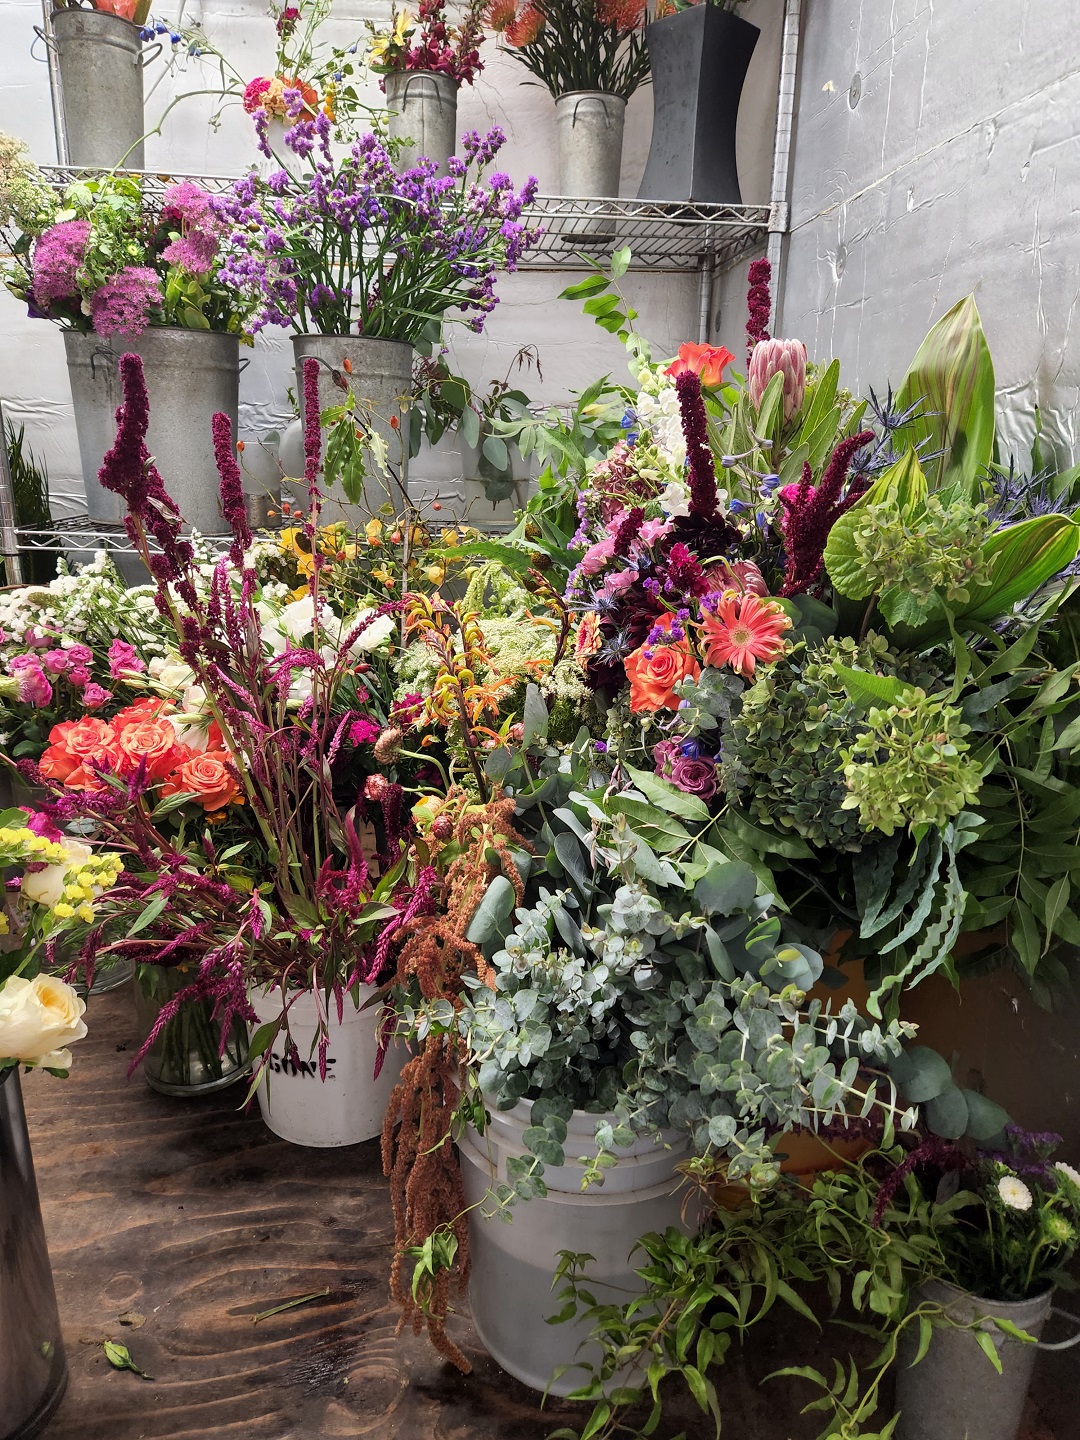 Stored flower arrangements